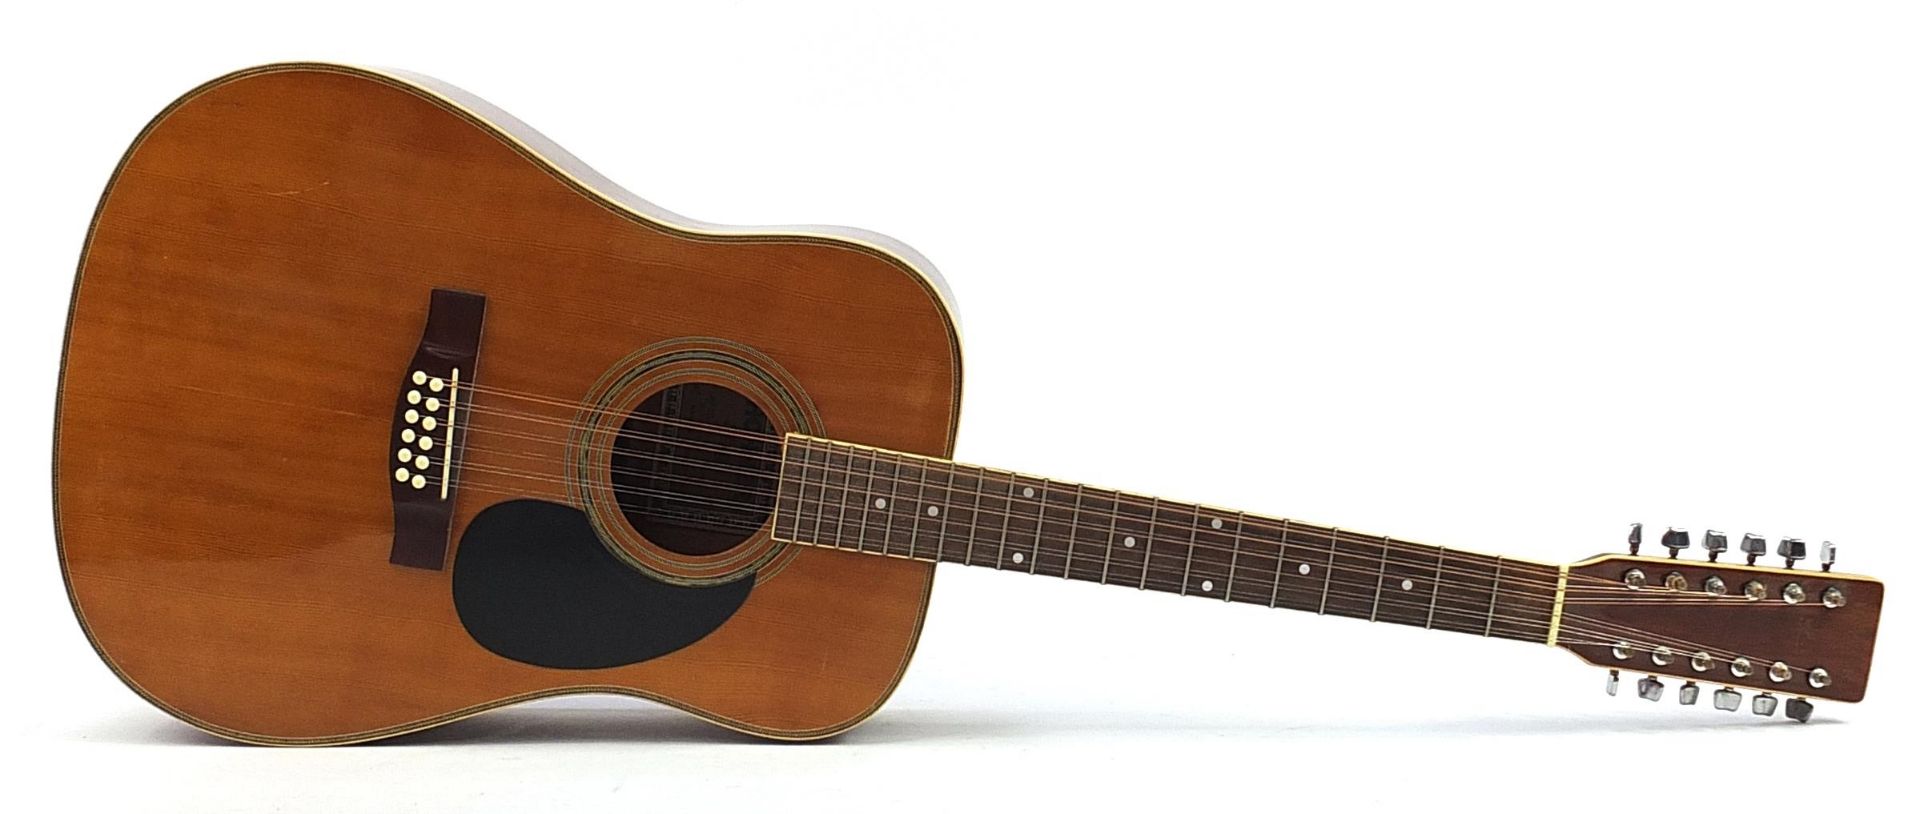 Hohner Leyanda twelve string acoustic guitar, model number LW1200N